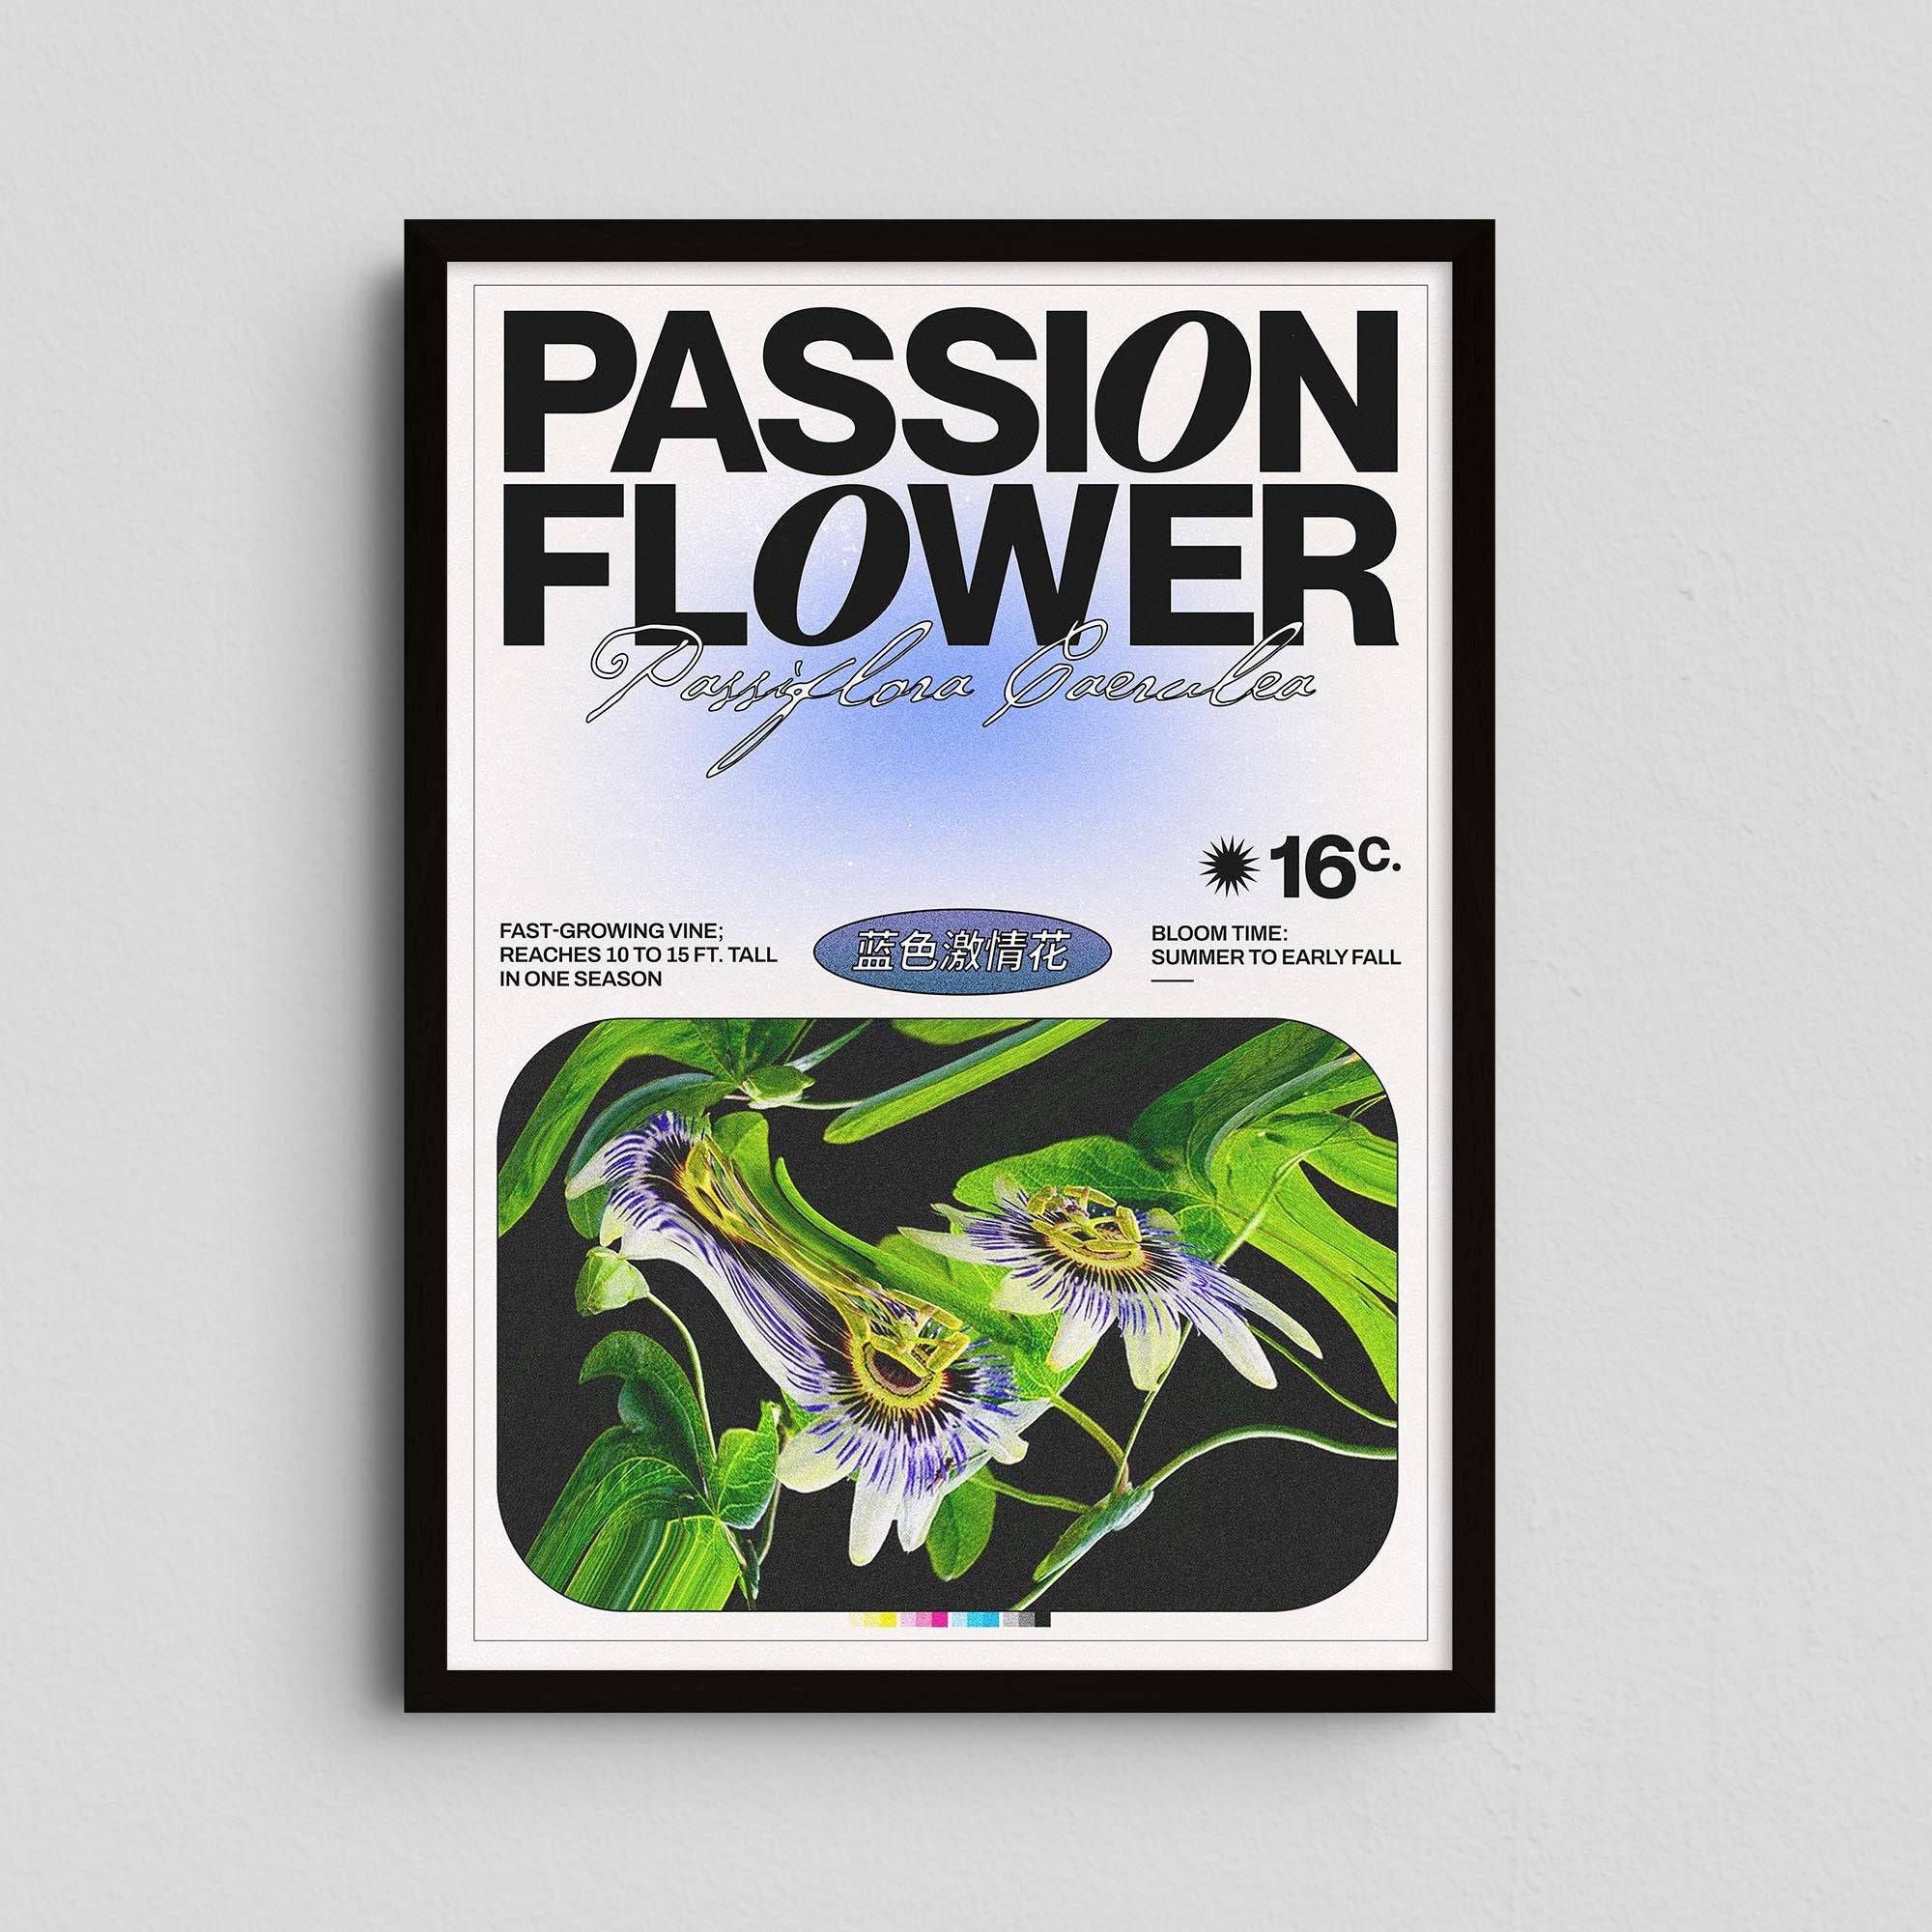 Passion Flower - Epi.to.me